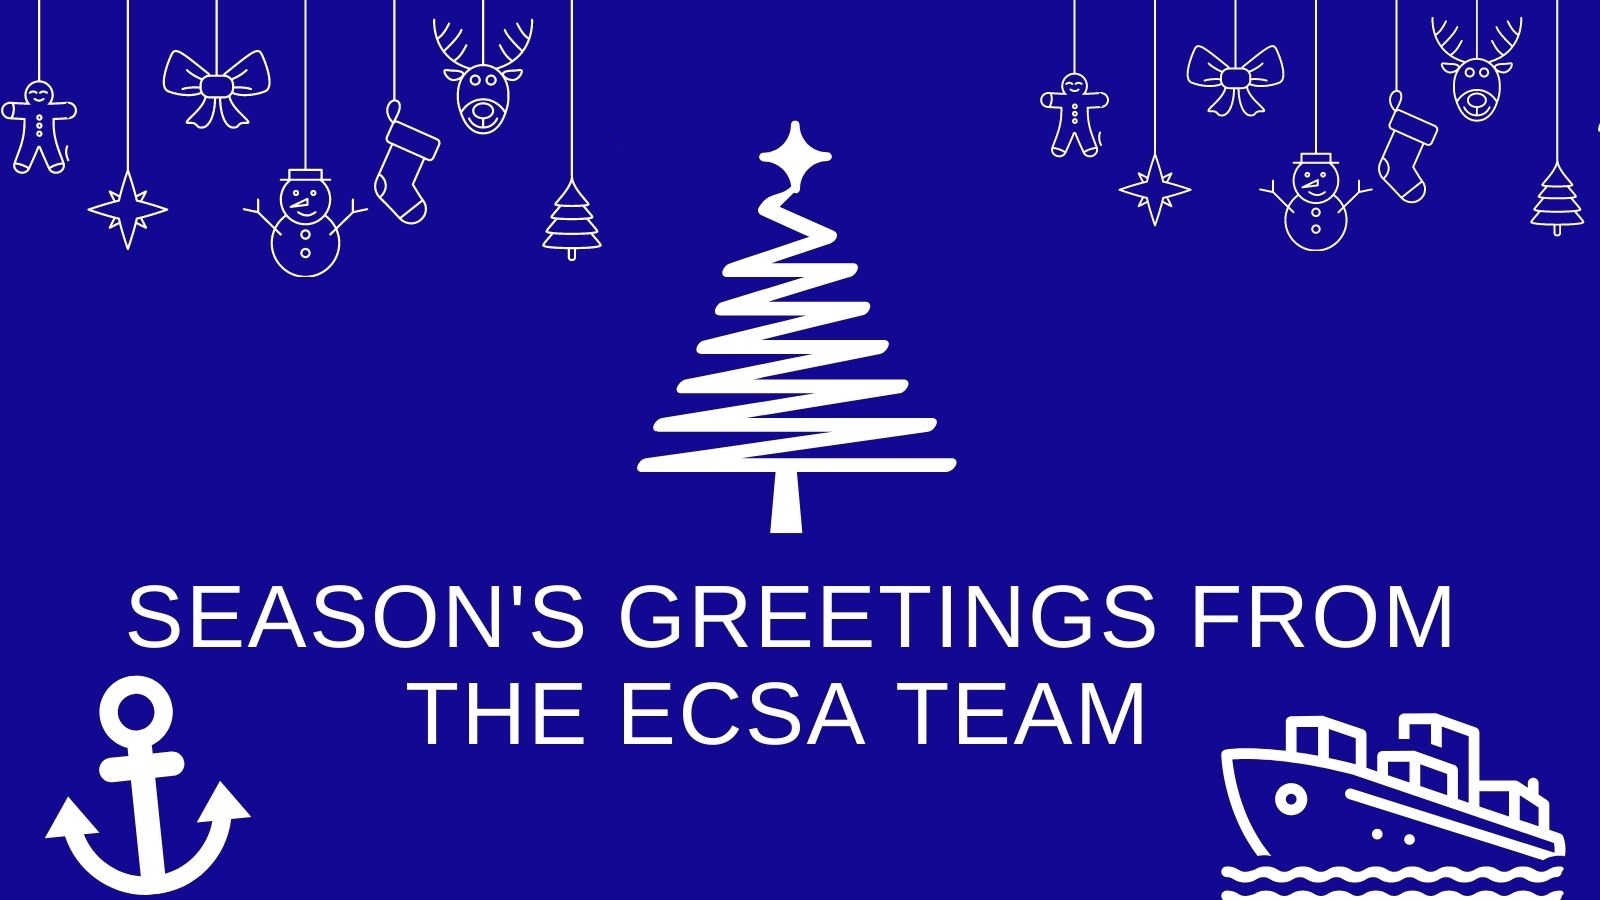 Season's Greetings from the ECSA team